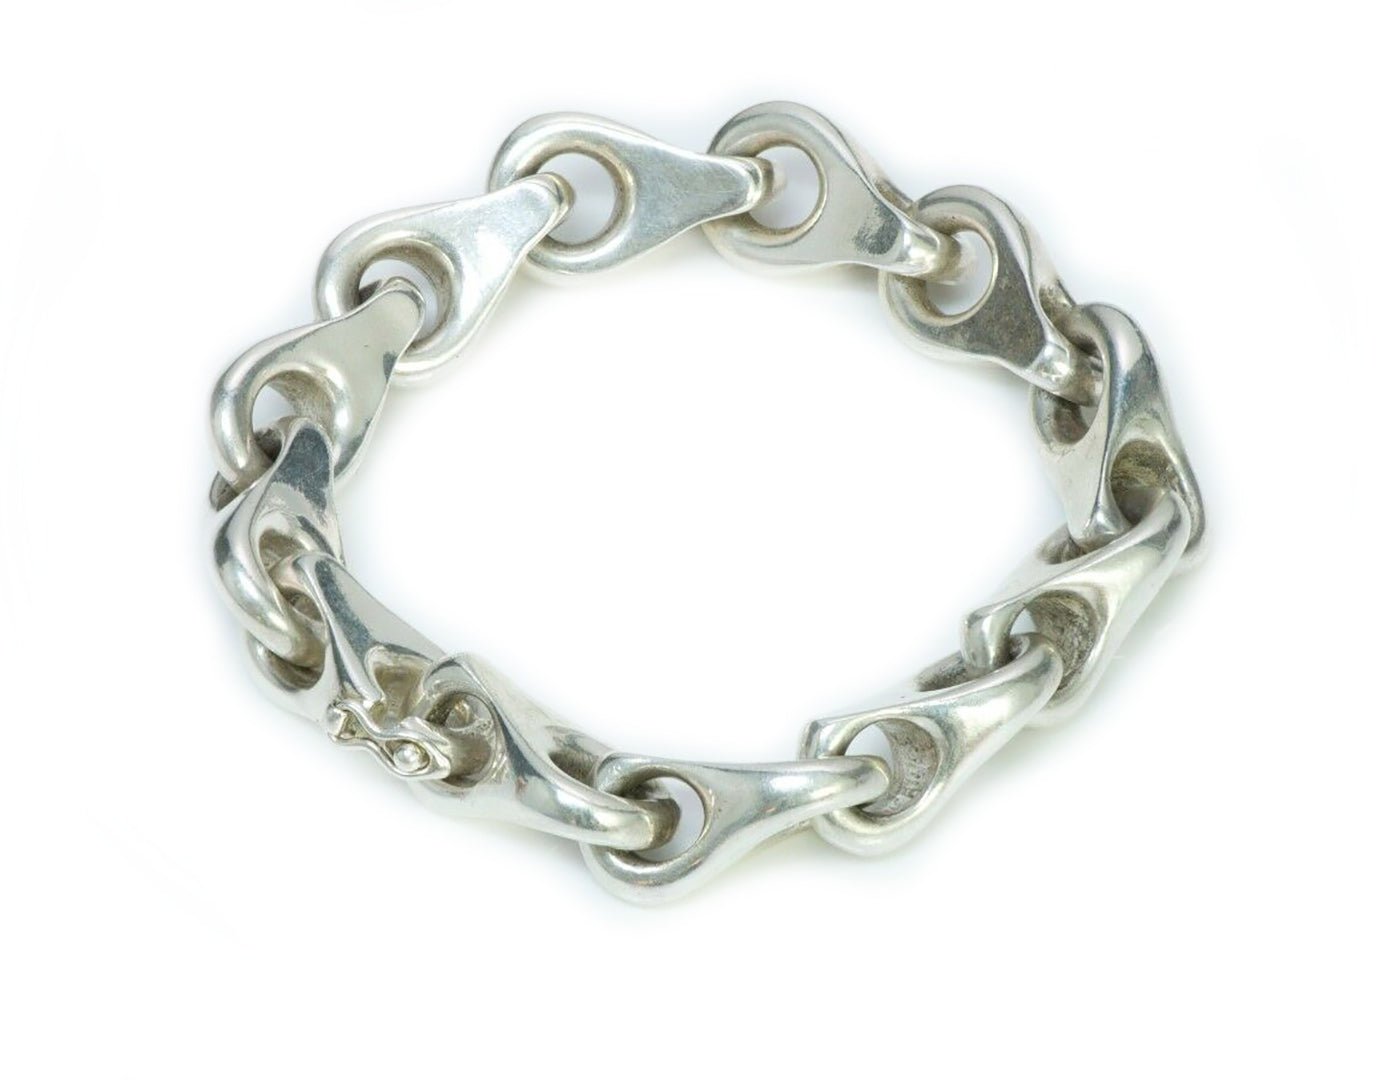 Vintage French Silver Link Chain Bracelet